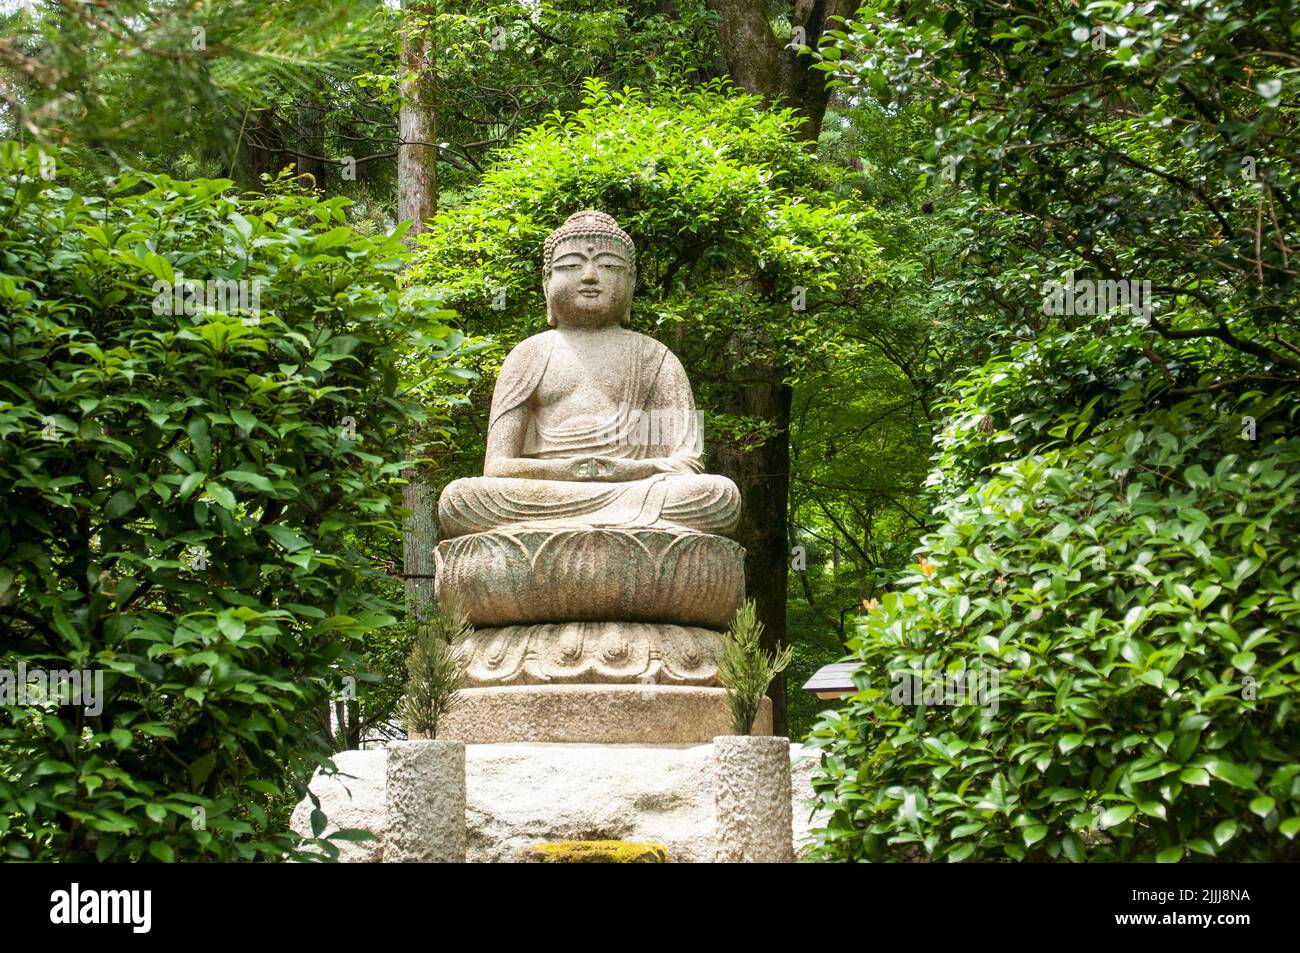 Statue of the Buddha, Kyoto Stock Photo